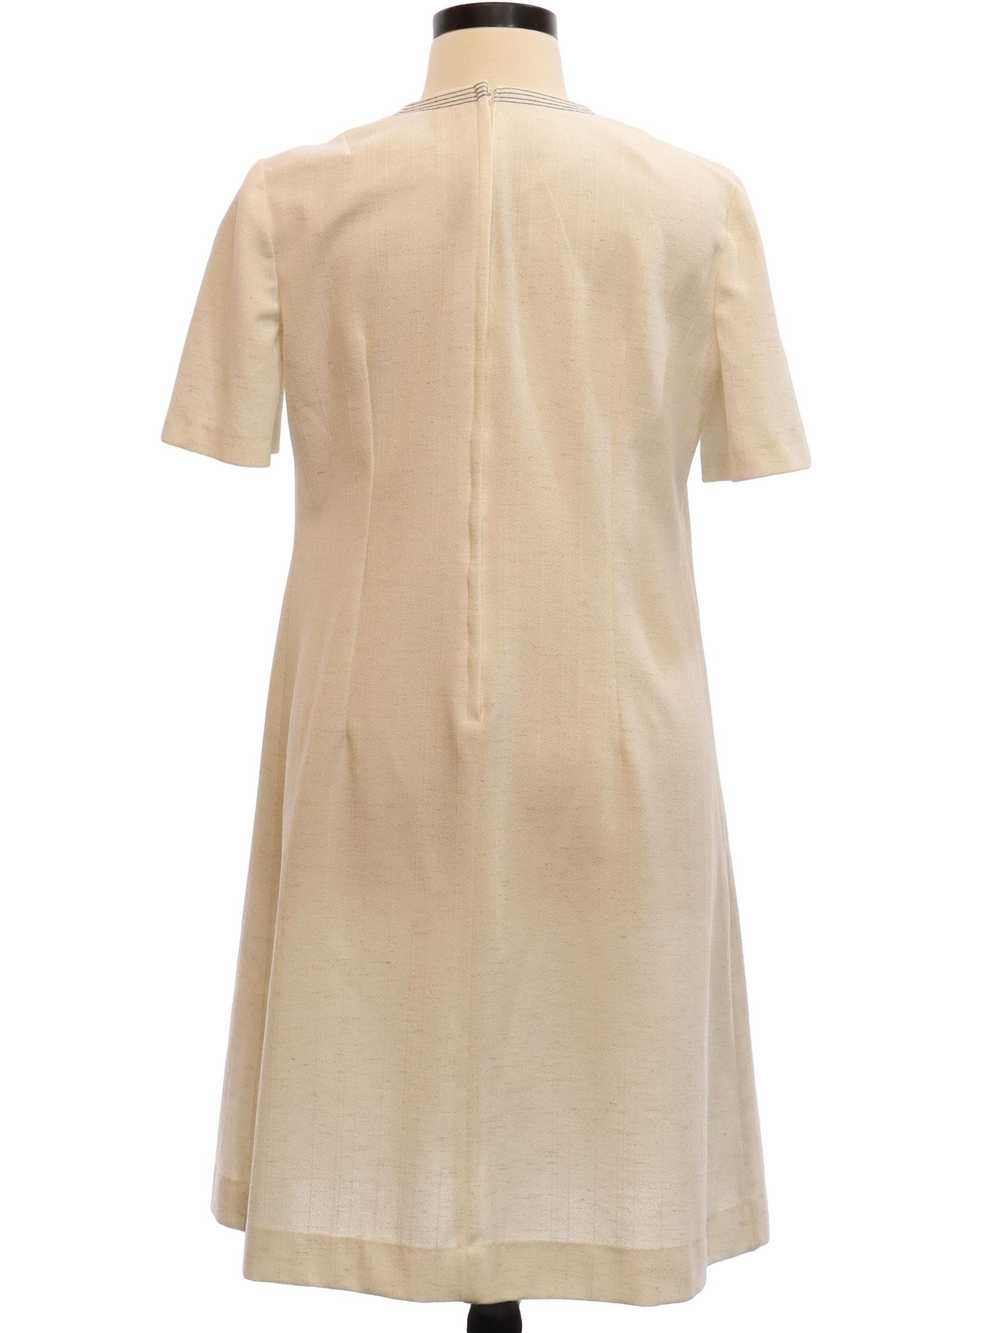 1960's Tribute Mod Knit Dress - image 3